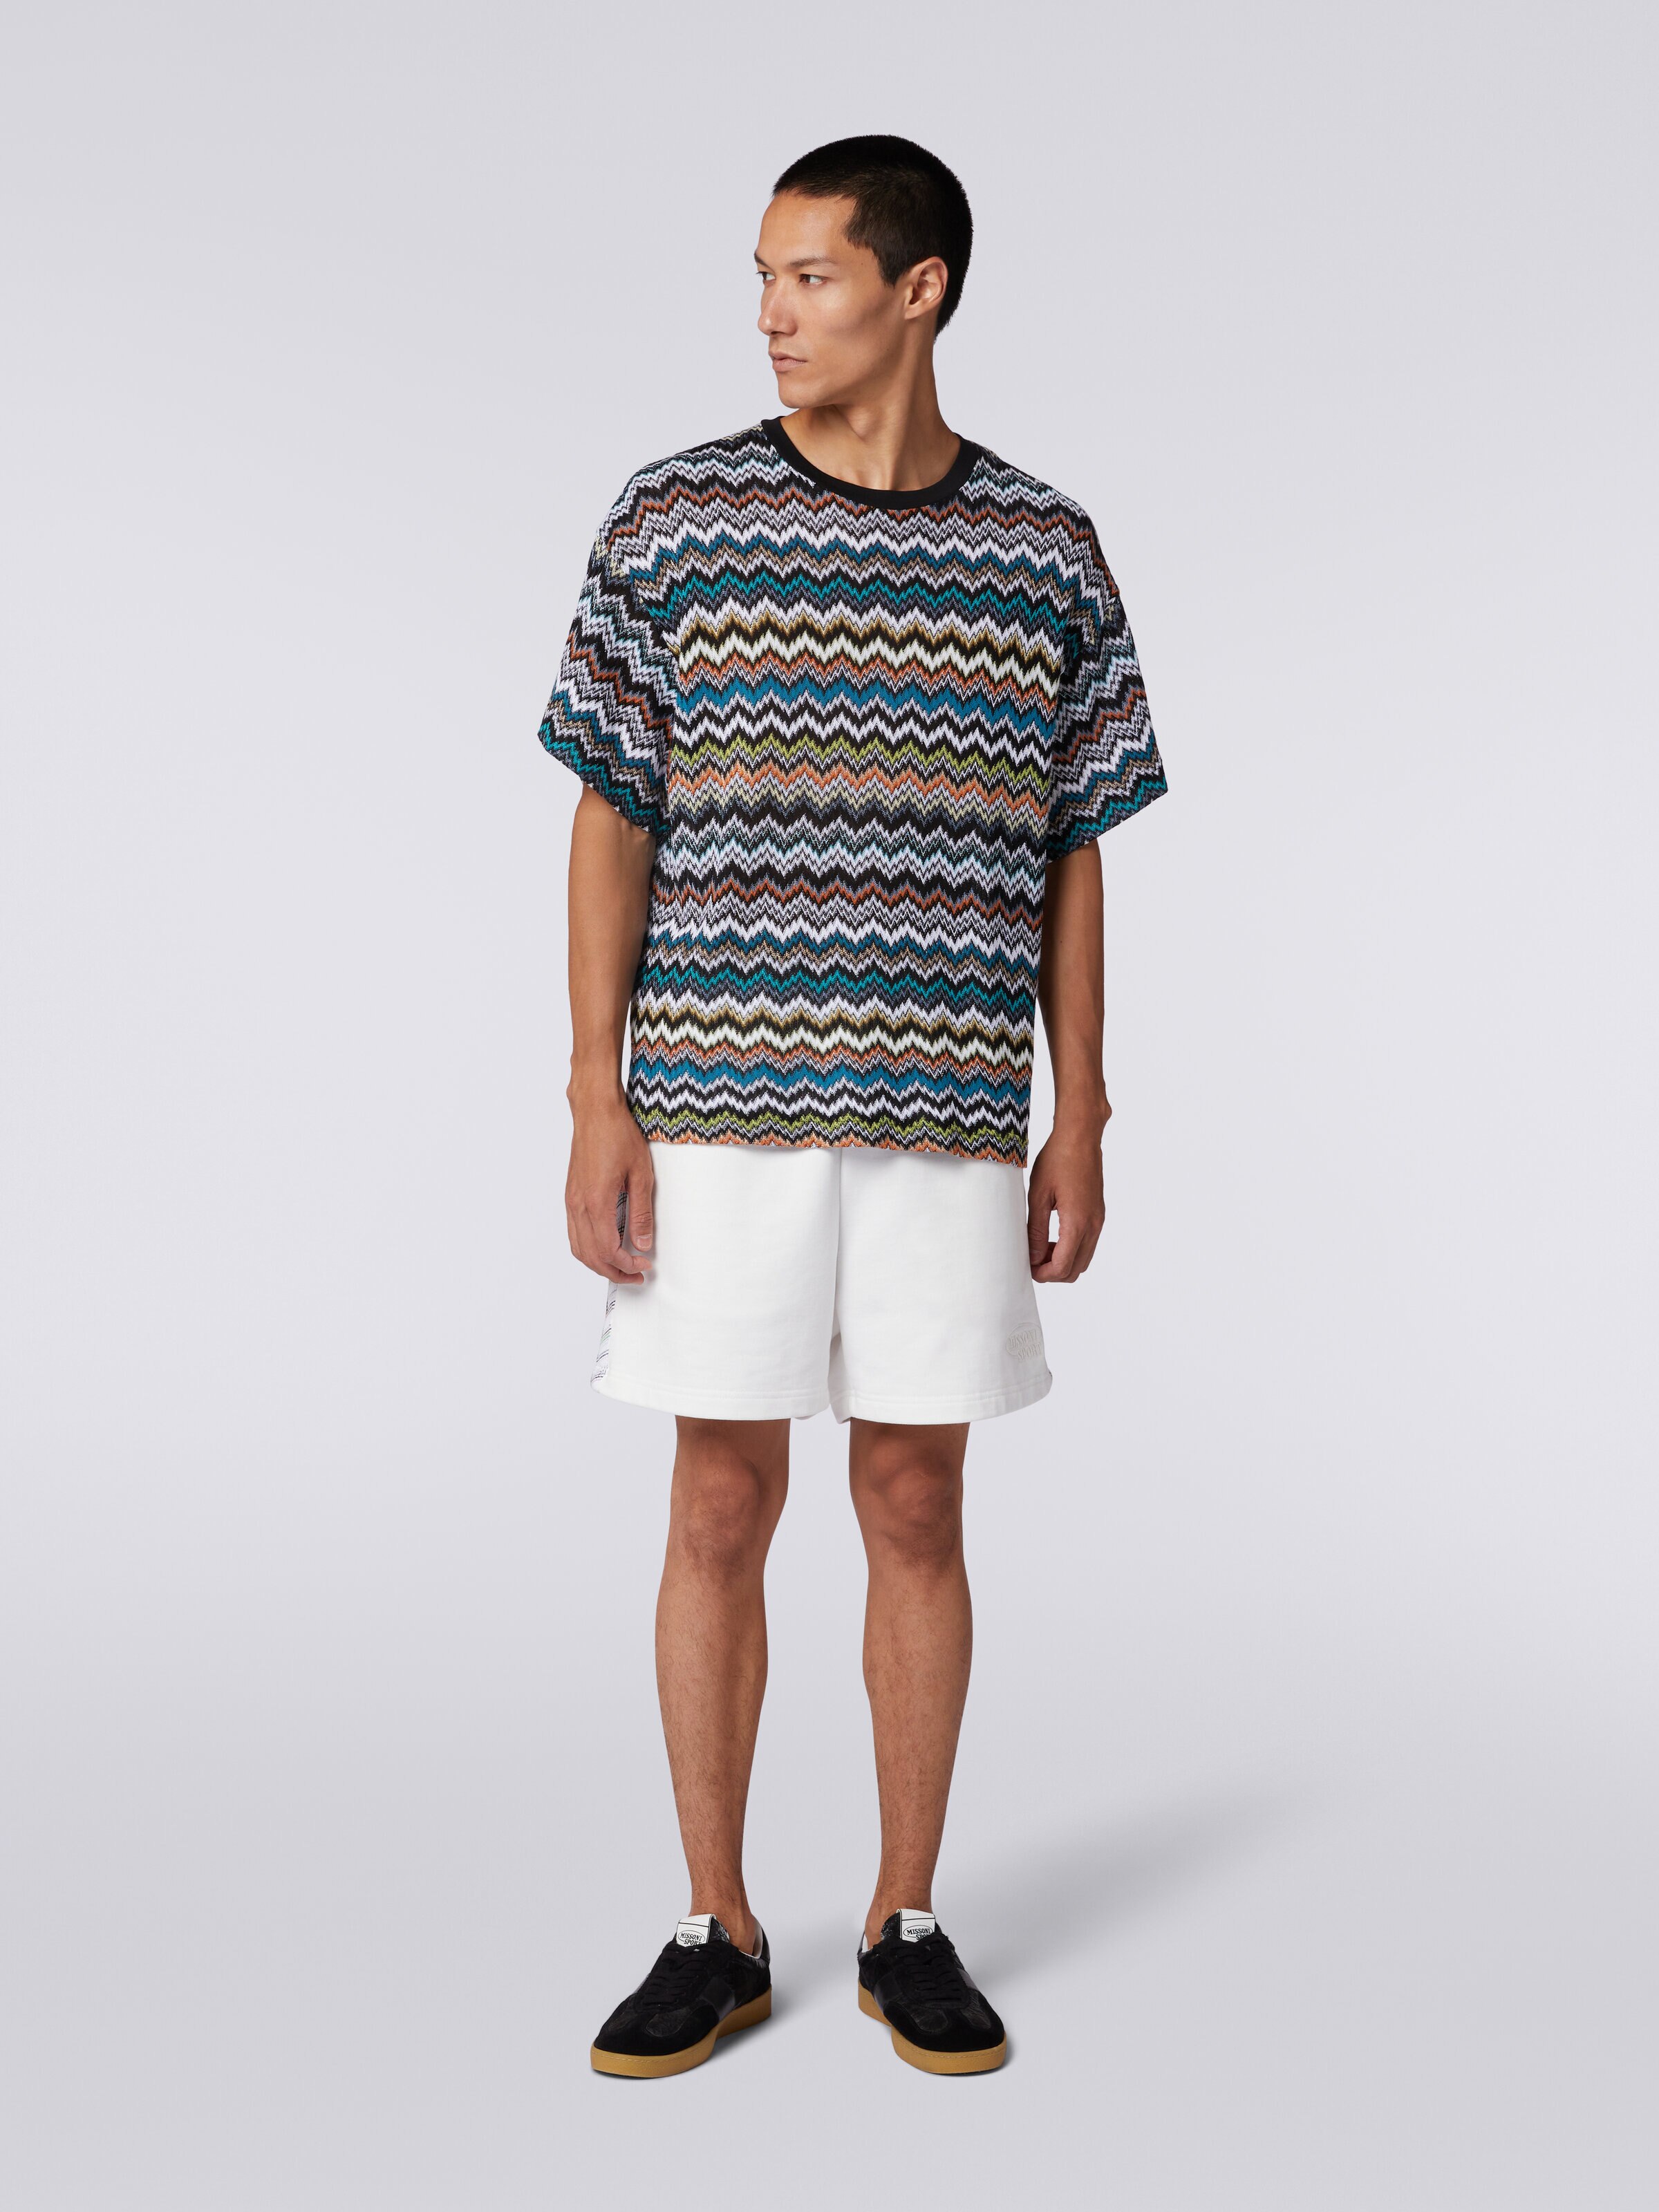 Crew-neck T-shirt in zigzag cotton knit, Multicoloured  - 1